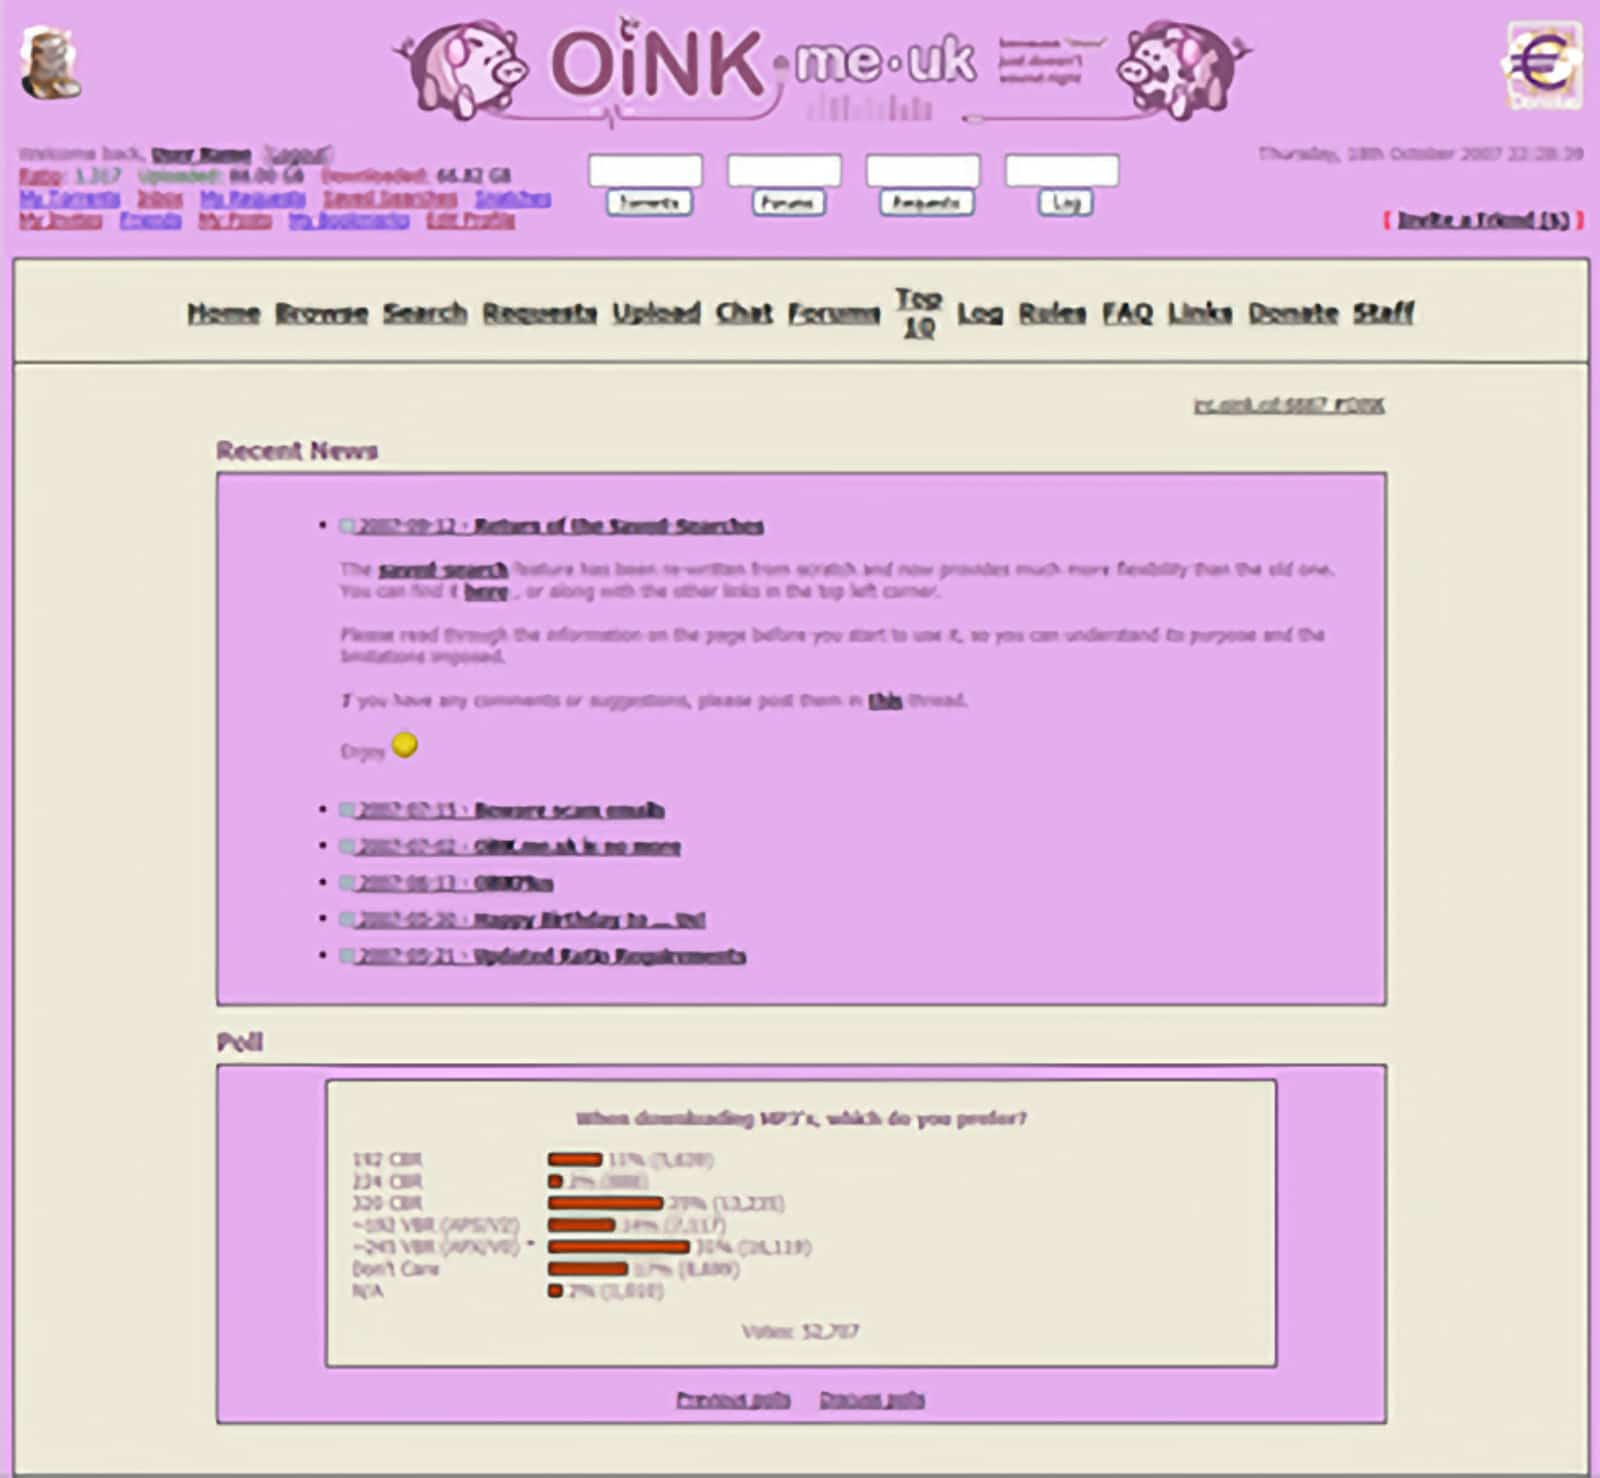 OINK screenshot 2007